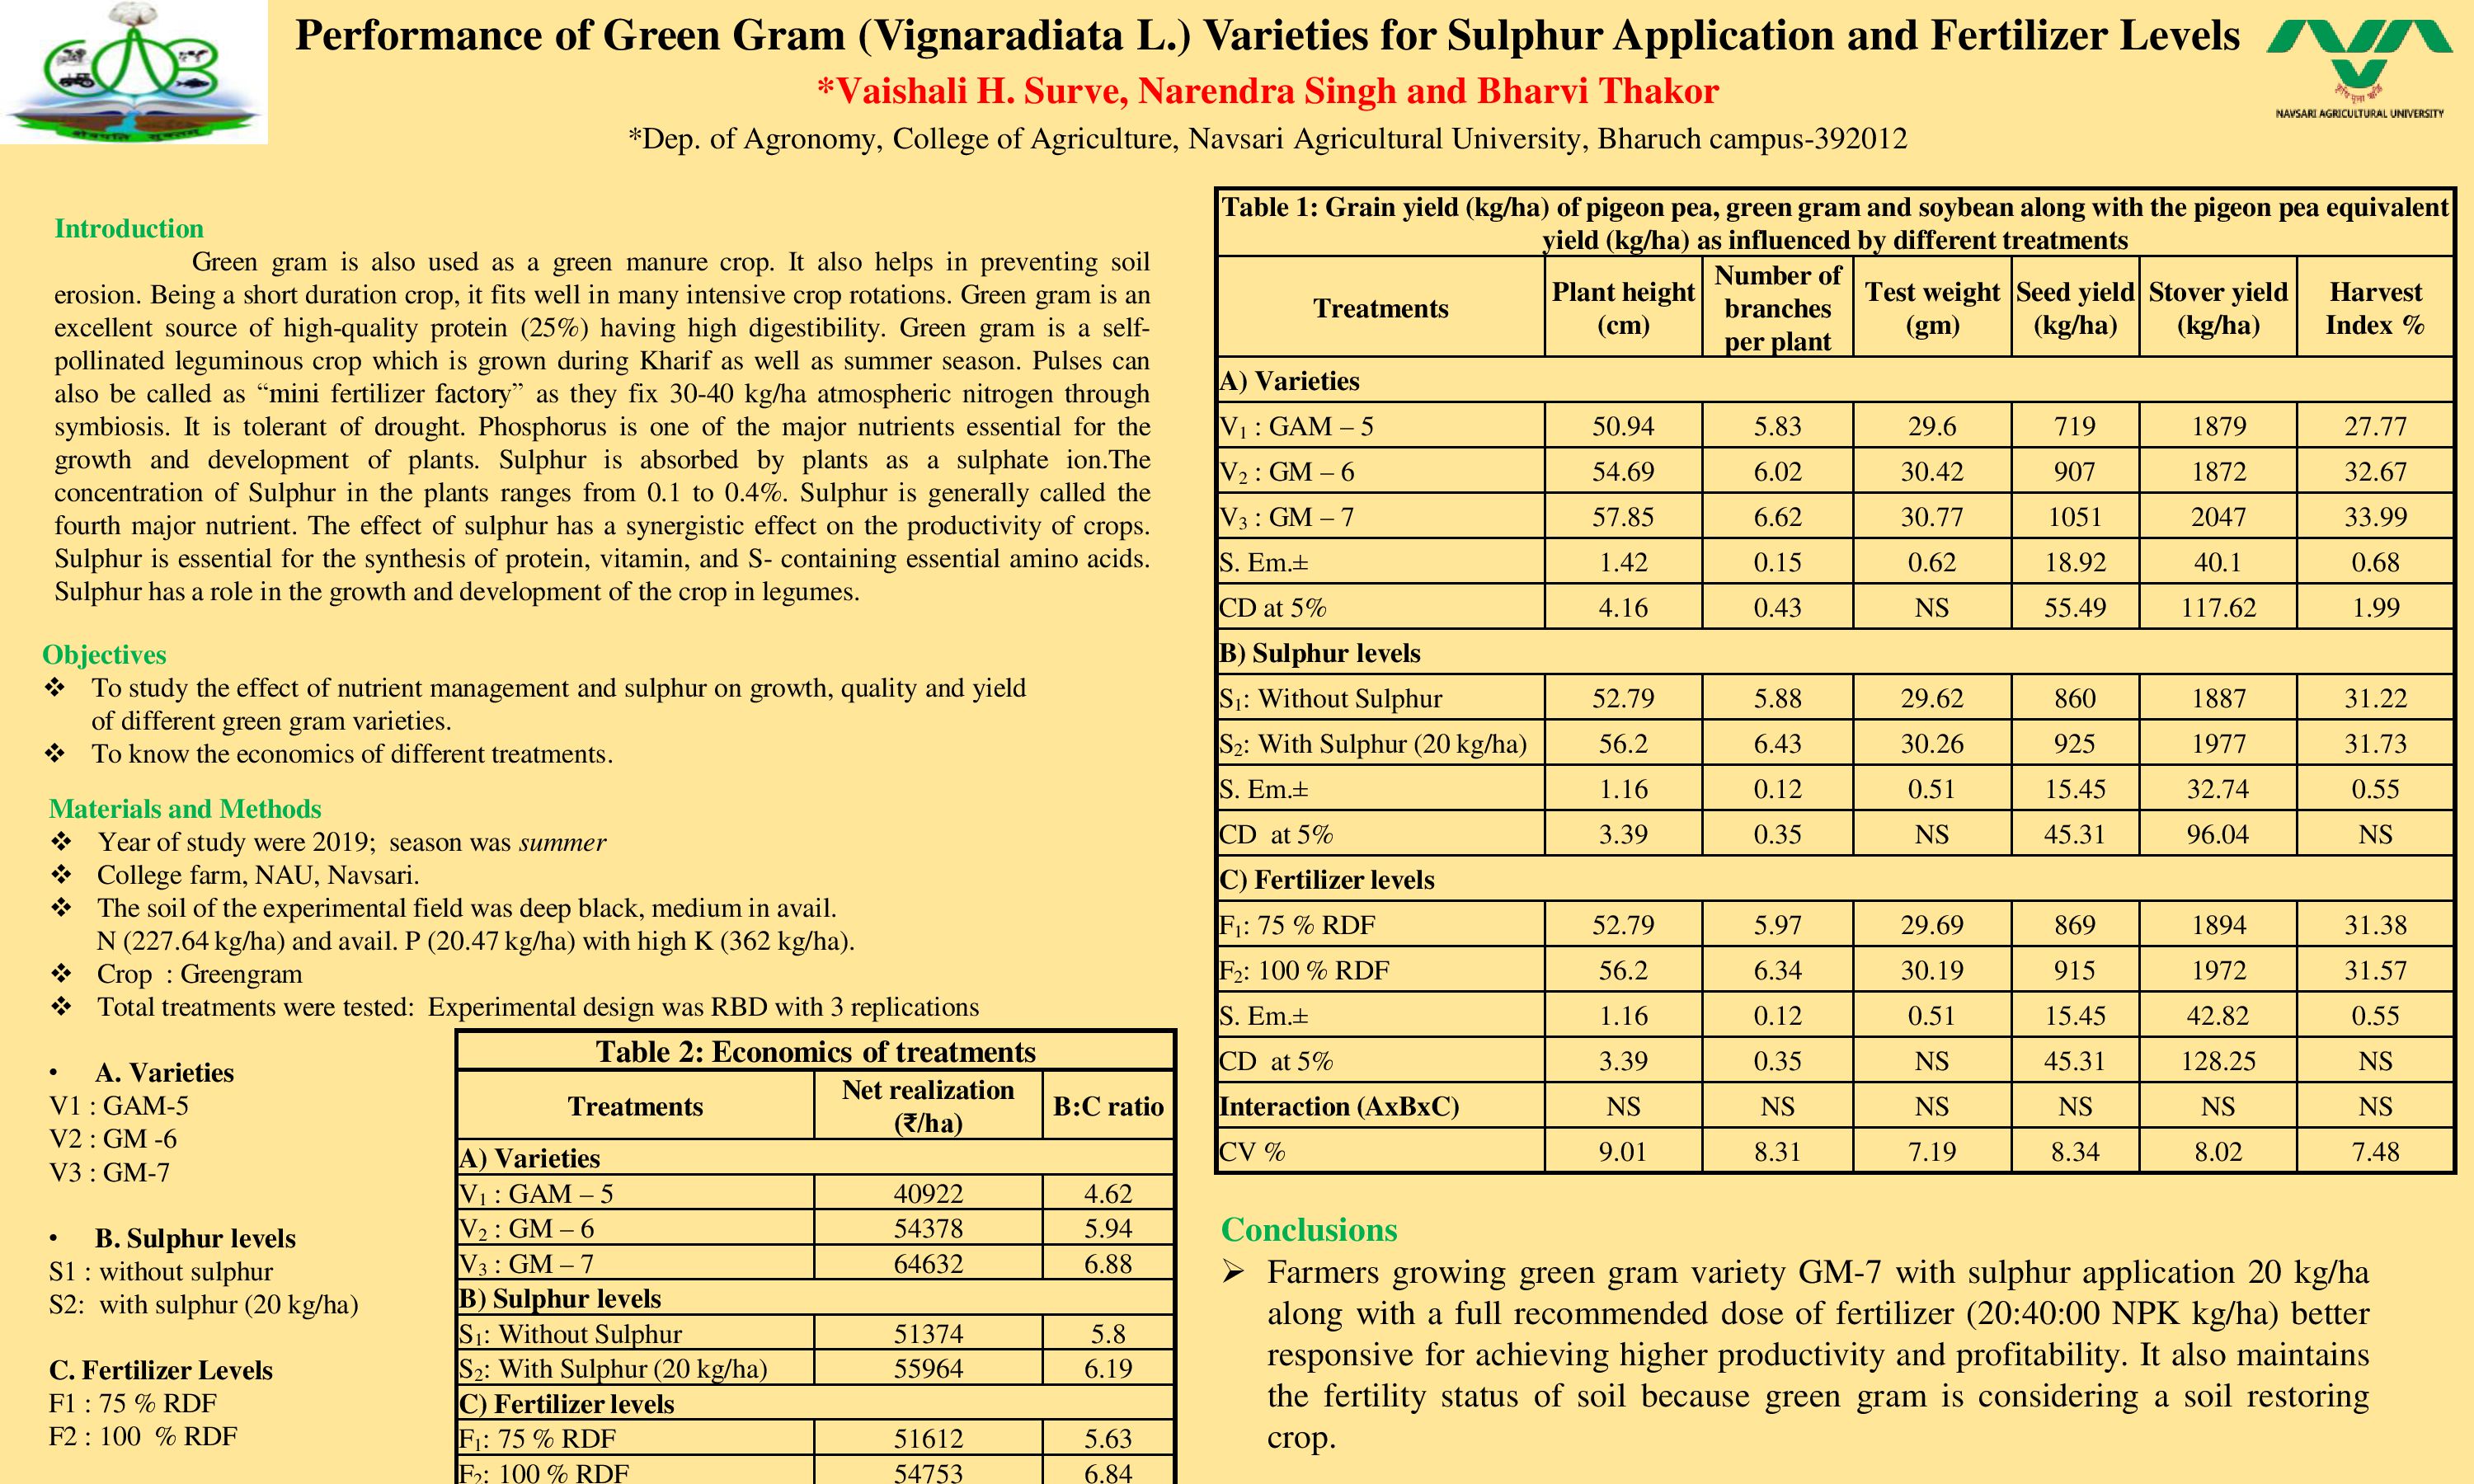 Performance of Green Gram Varieties for Sulphur Application and Fertilizer Levels